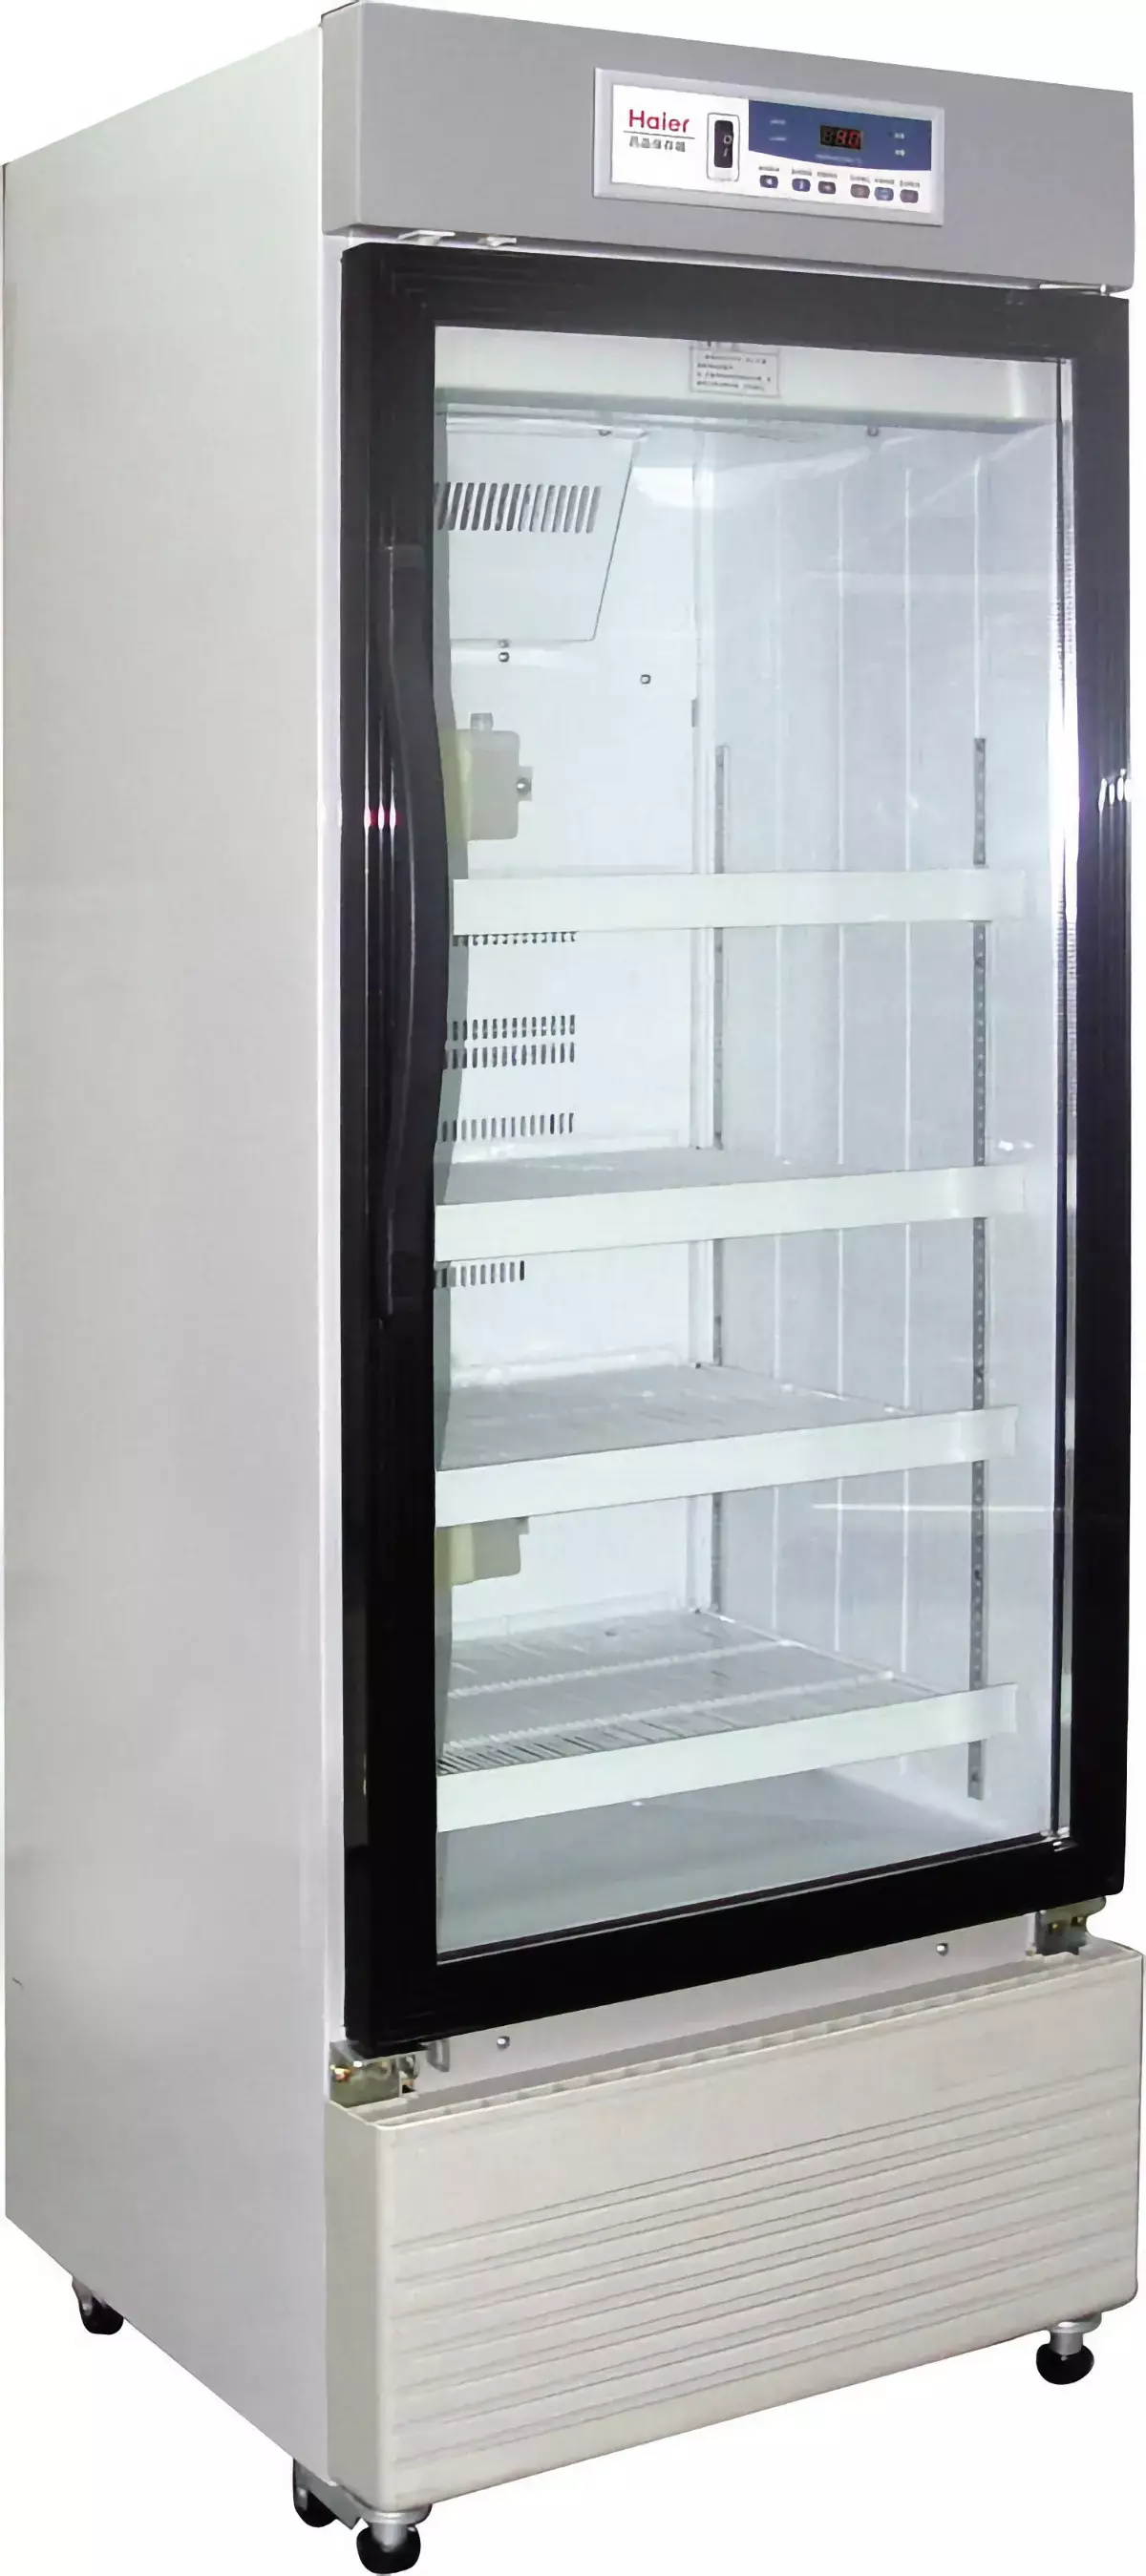 Фармацевтический холодильник HYC-360